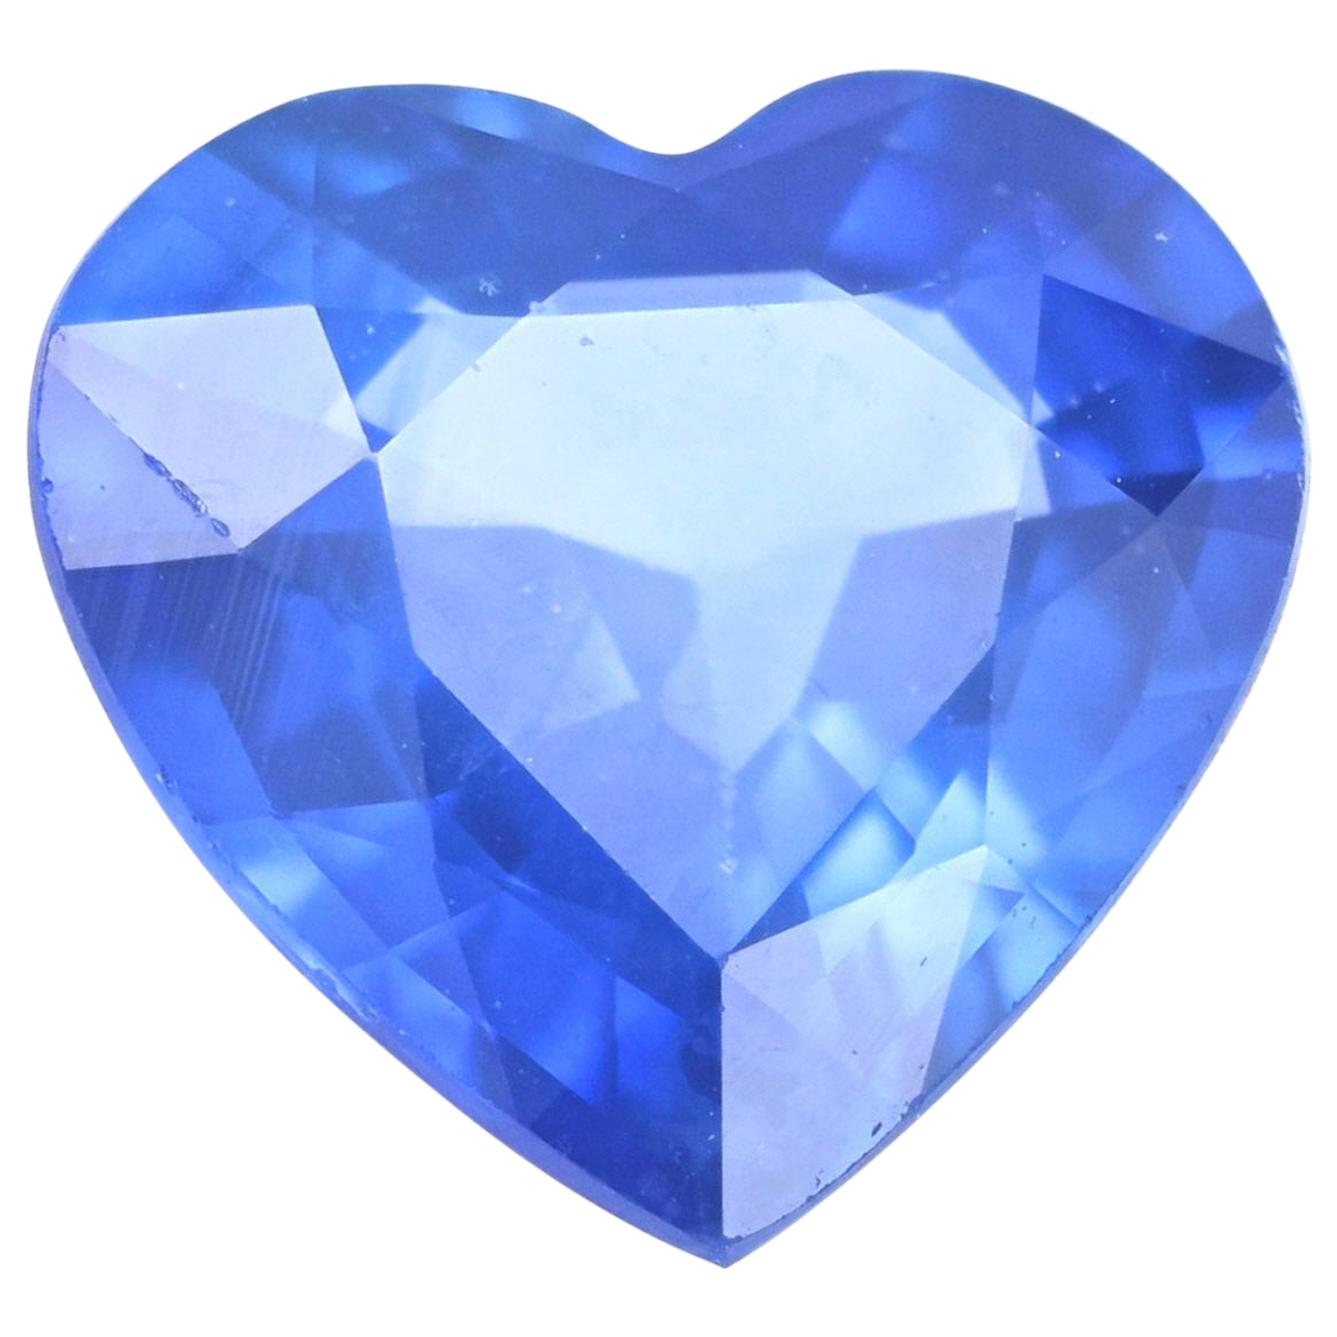 Loose Sapphire, Heart Cut 1.65 Carat Blue Solitaire